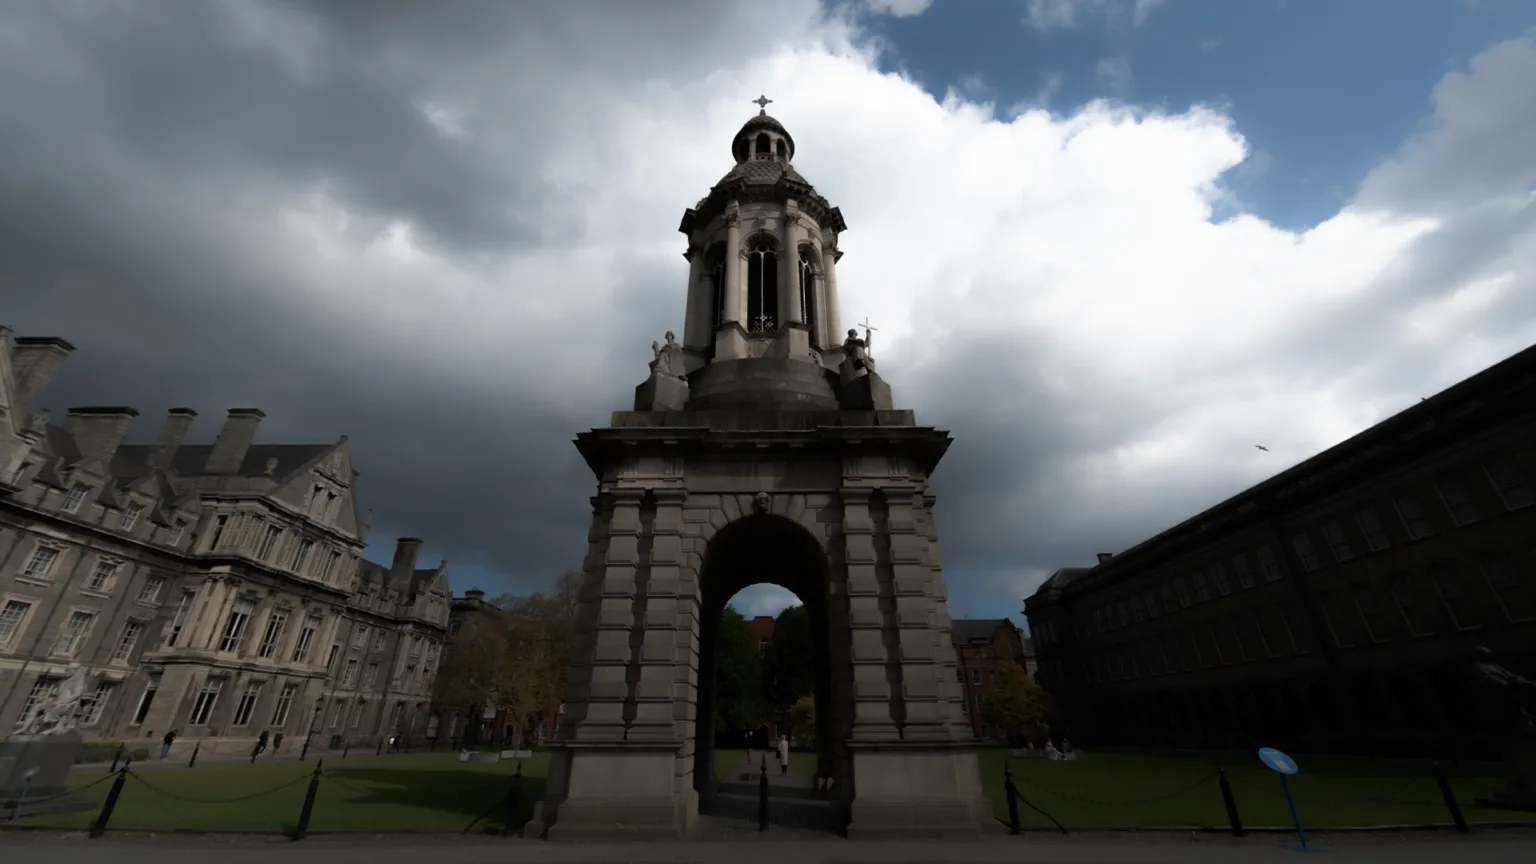 RAW photo of trinity college Dublin, Ireland before Lightroom Editing.